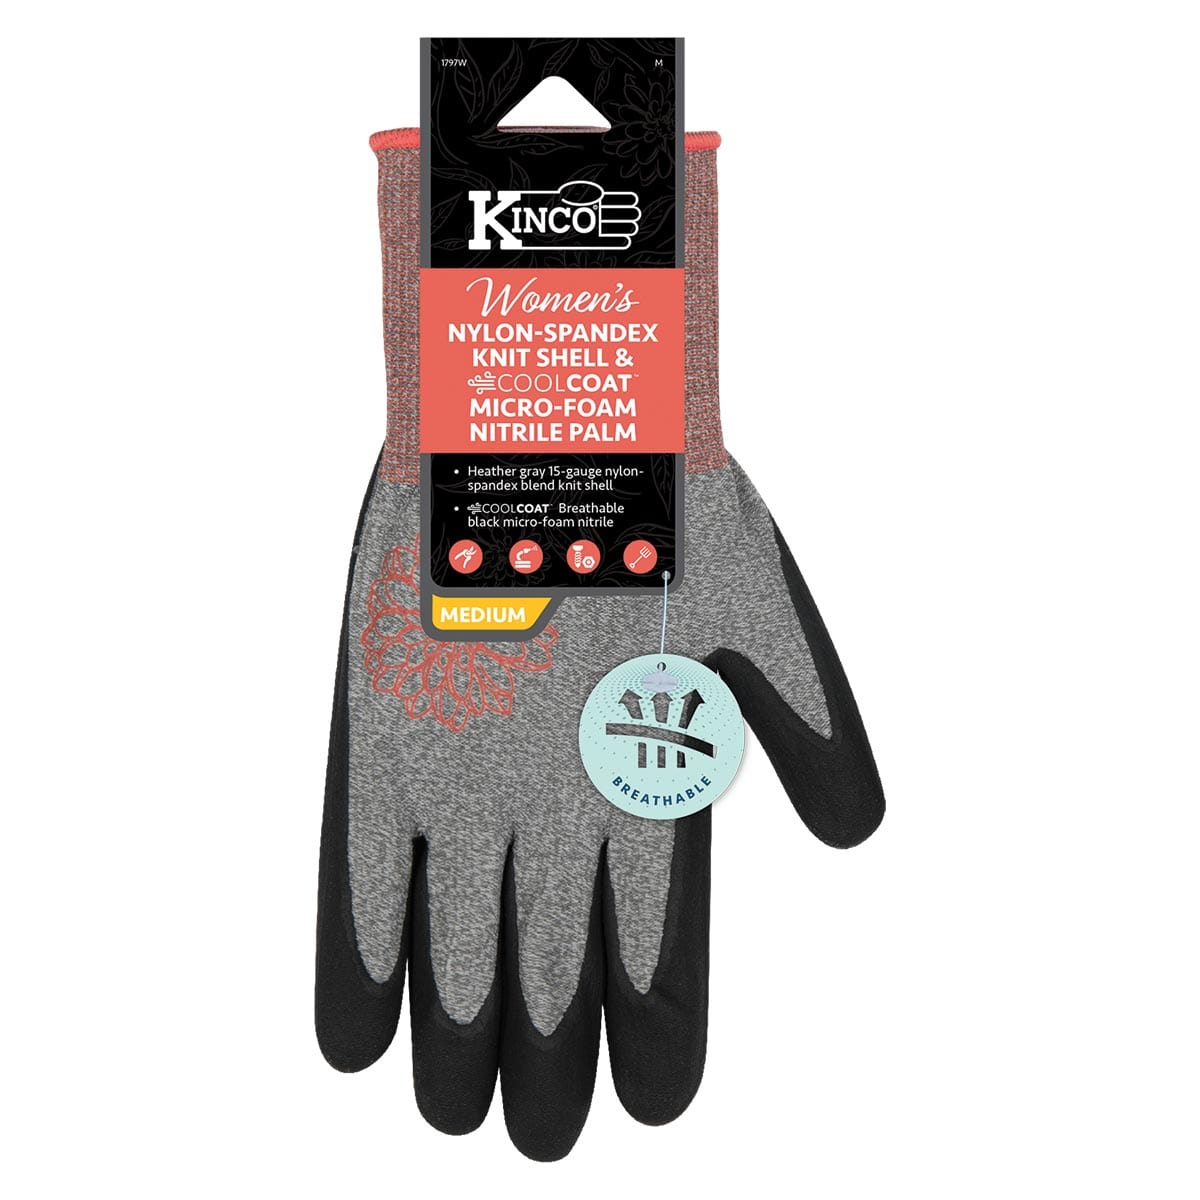 Kinco Women’s Nylon-Spandex Knit Shell & Micro-Foam Nitrile Palm Gloves